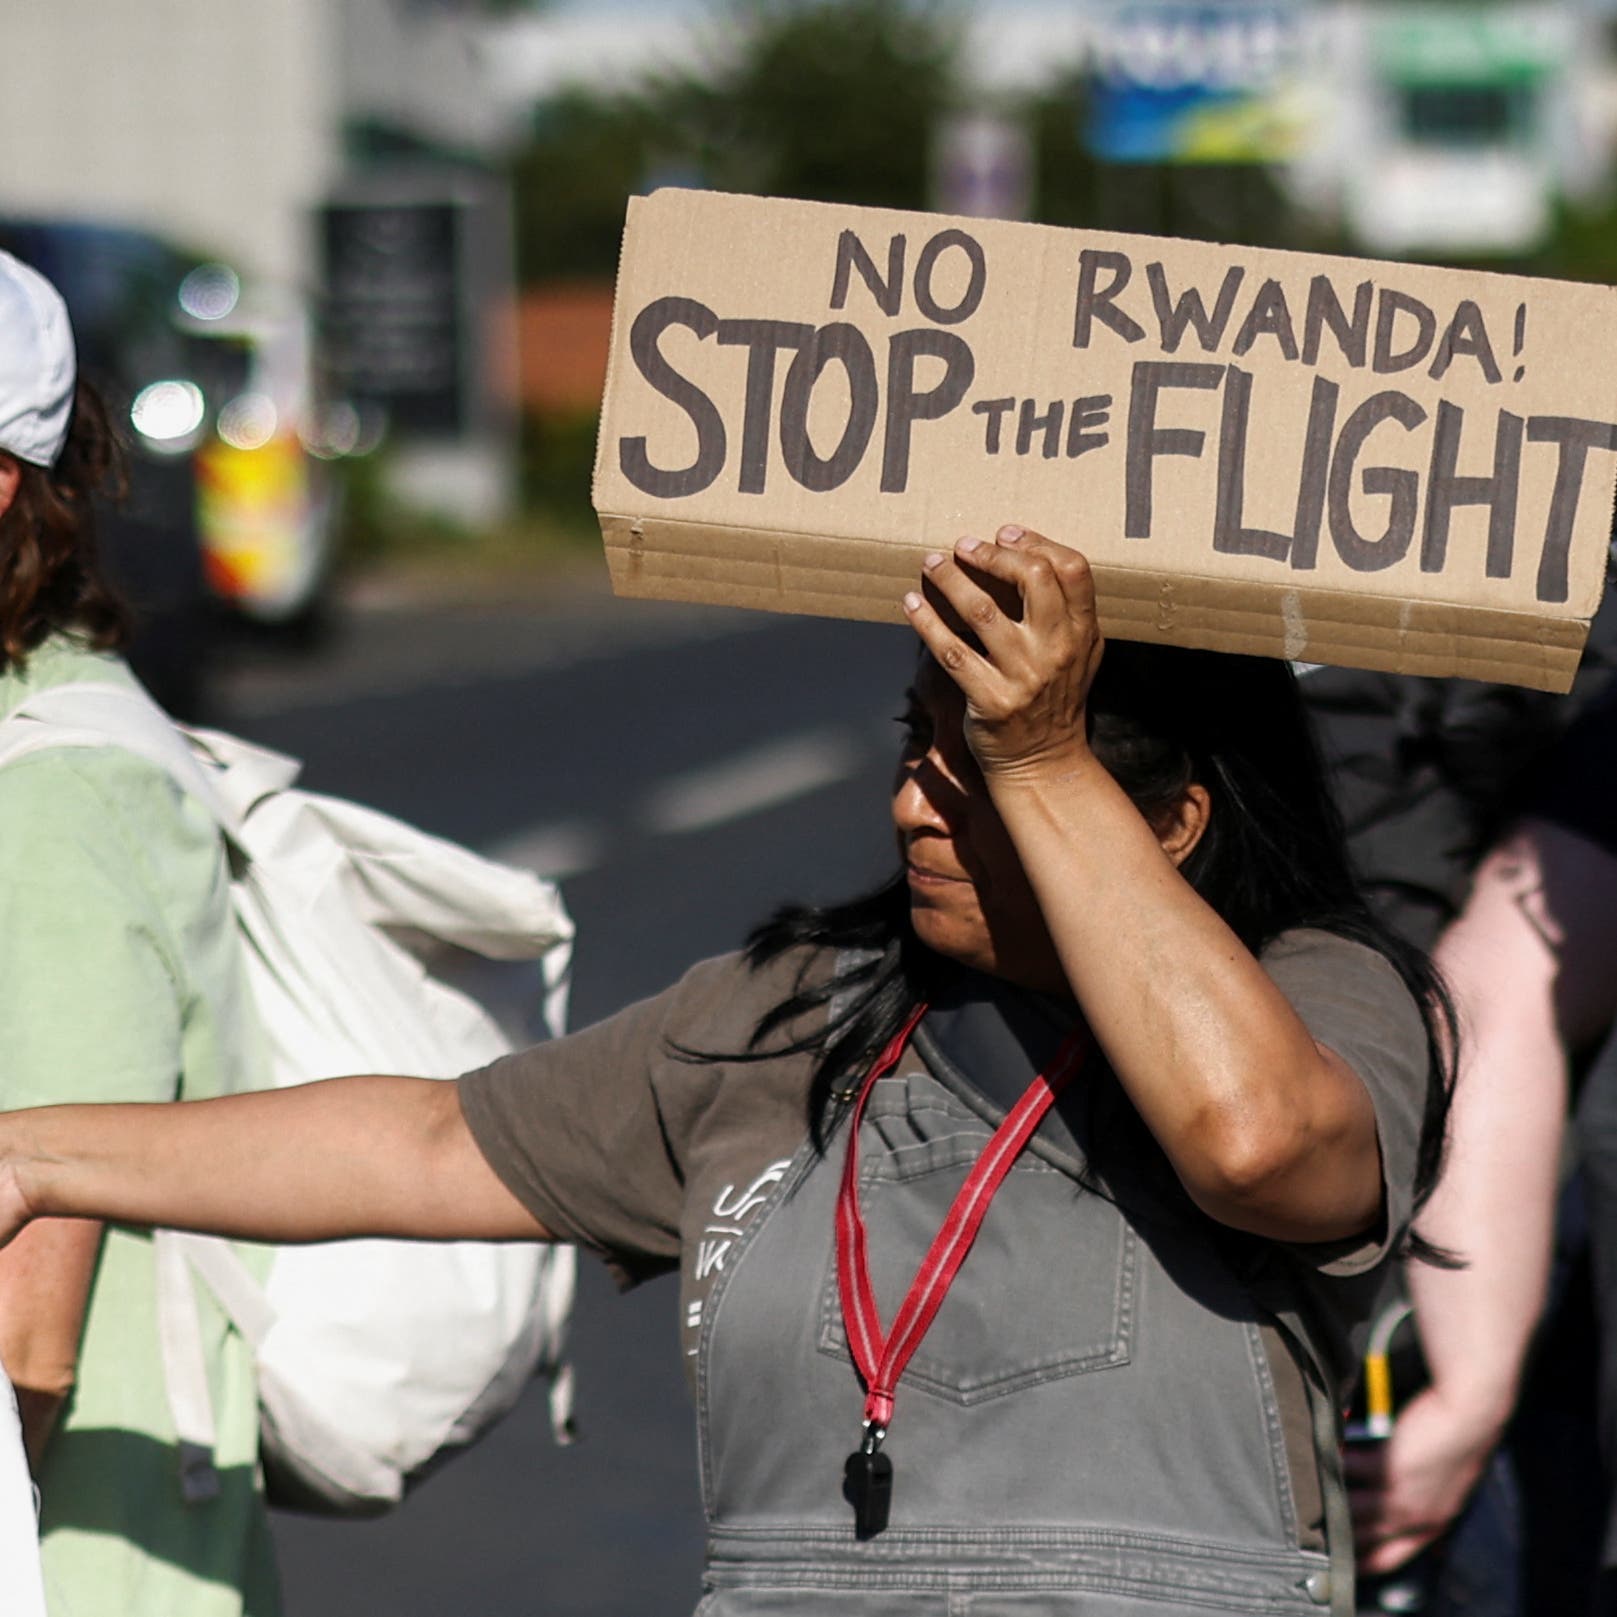 Explainer: Why are asylum seekers in UK being sent to Rwanda?